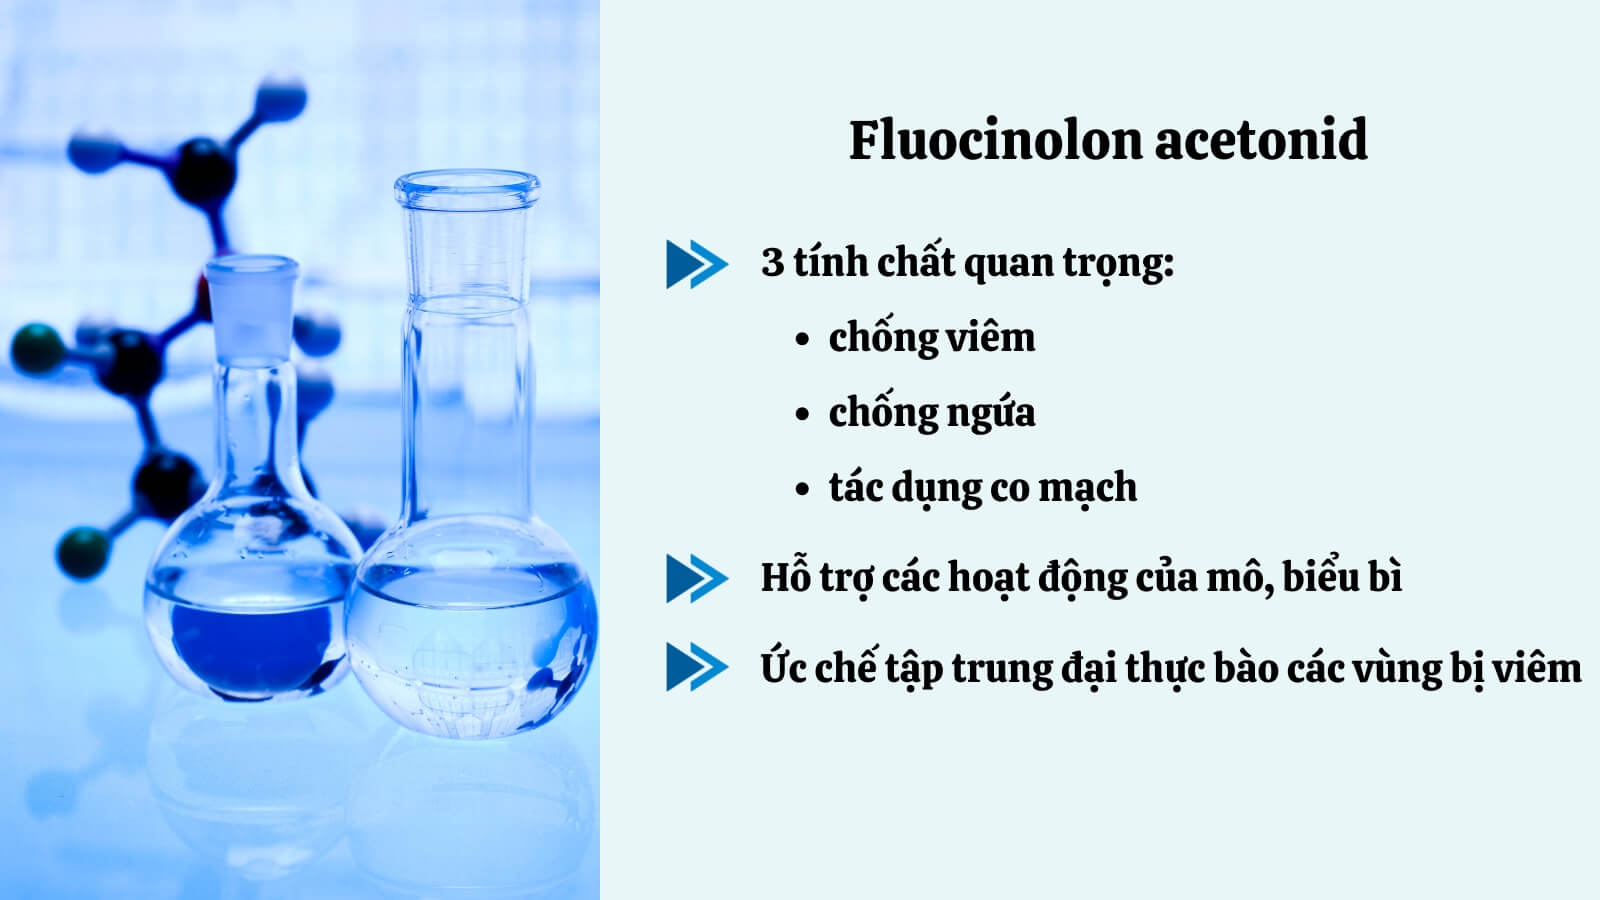 Fluocinolon acetonid và các công dụng